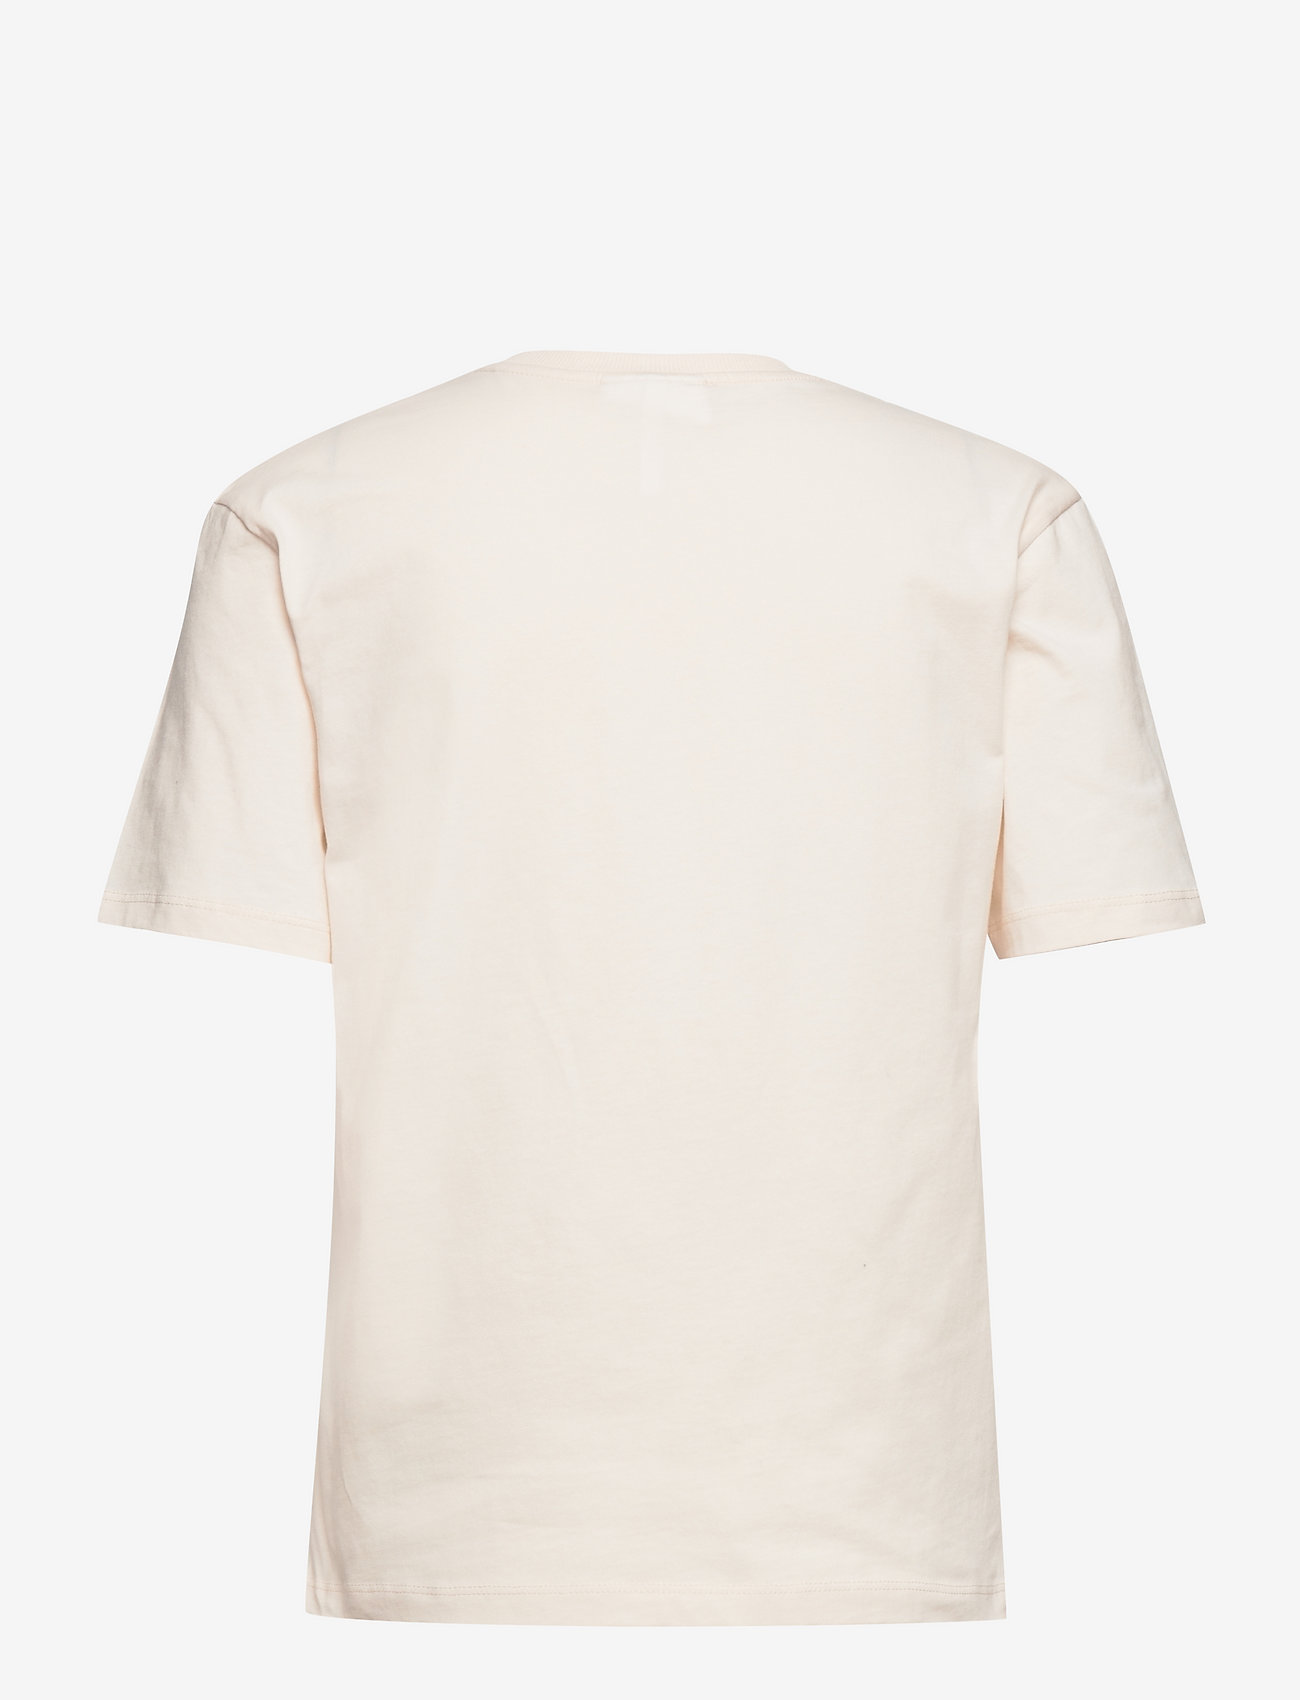 Soulland - Cea T-shirt - t-shirts - off white - 1